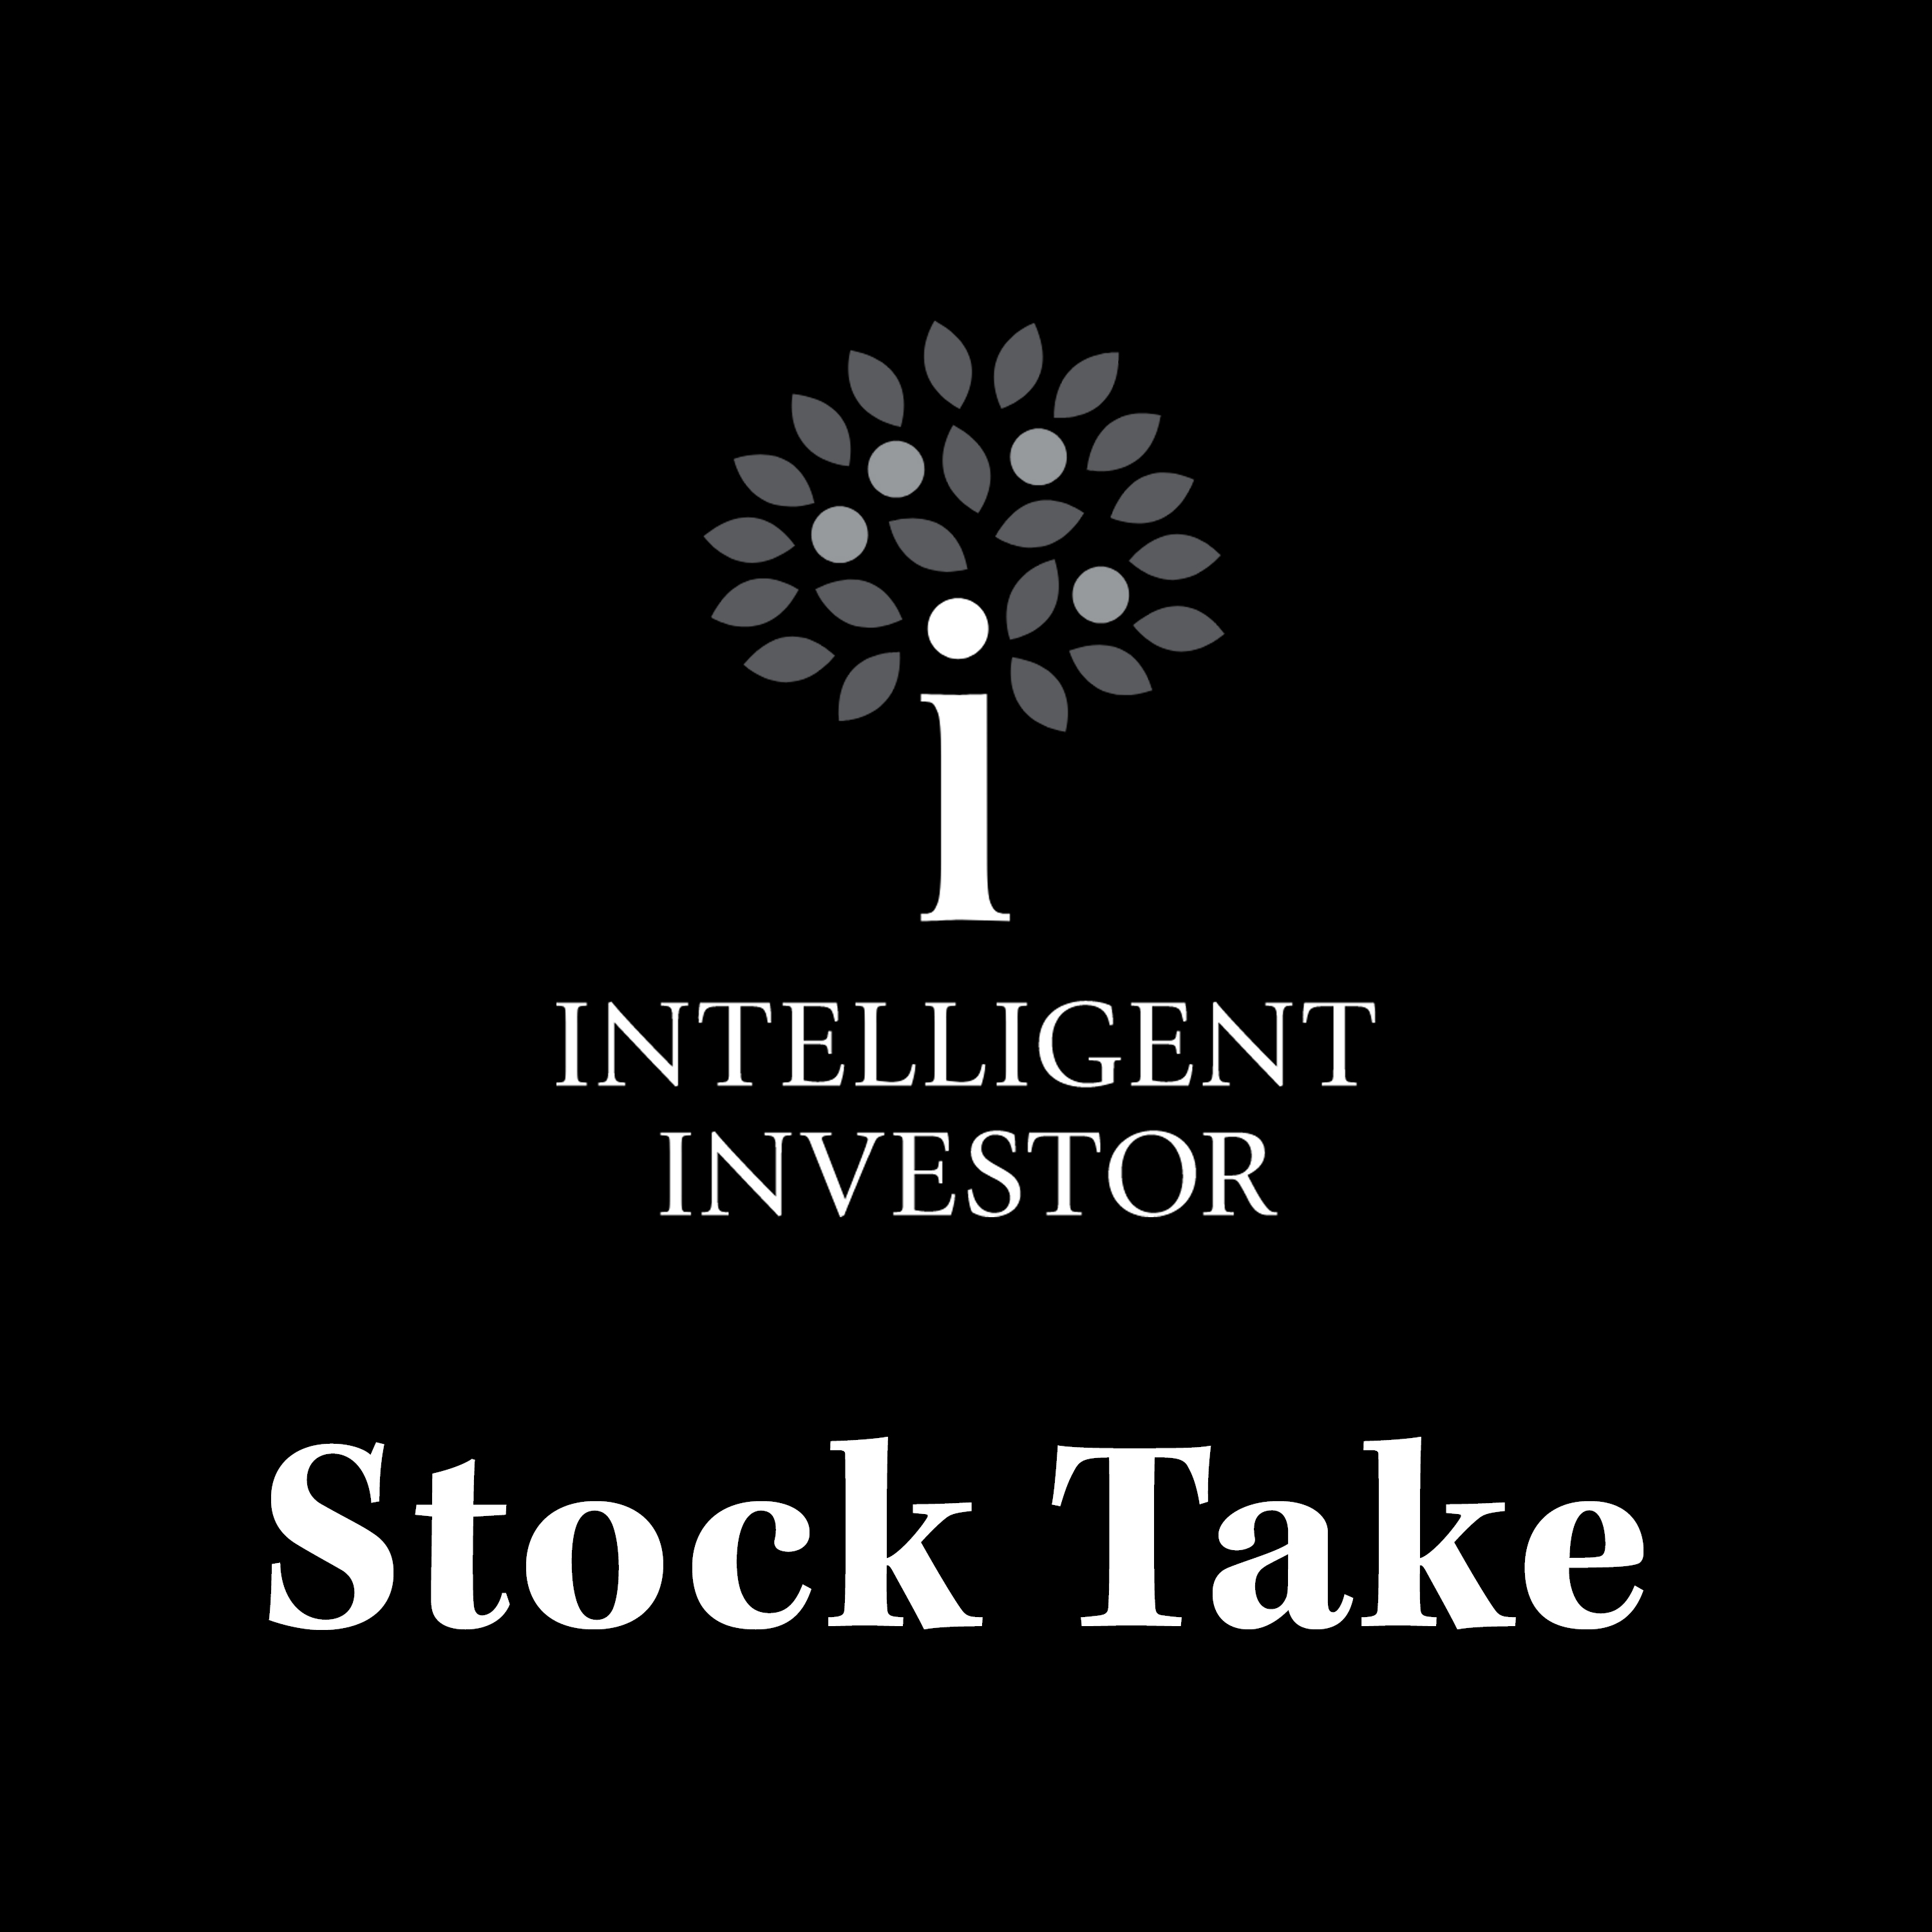 Stock Take – Small stocks in focus